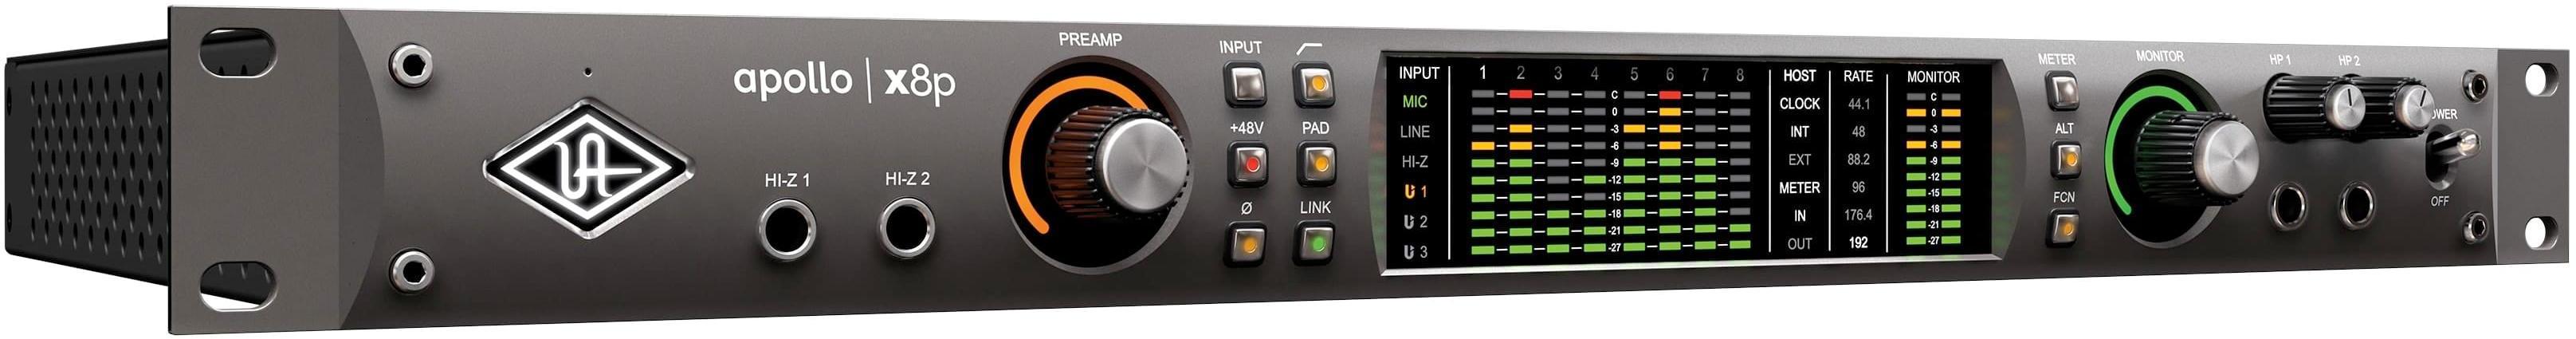 Interface de audio thunderbolt Universal audio Apollo x8p